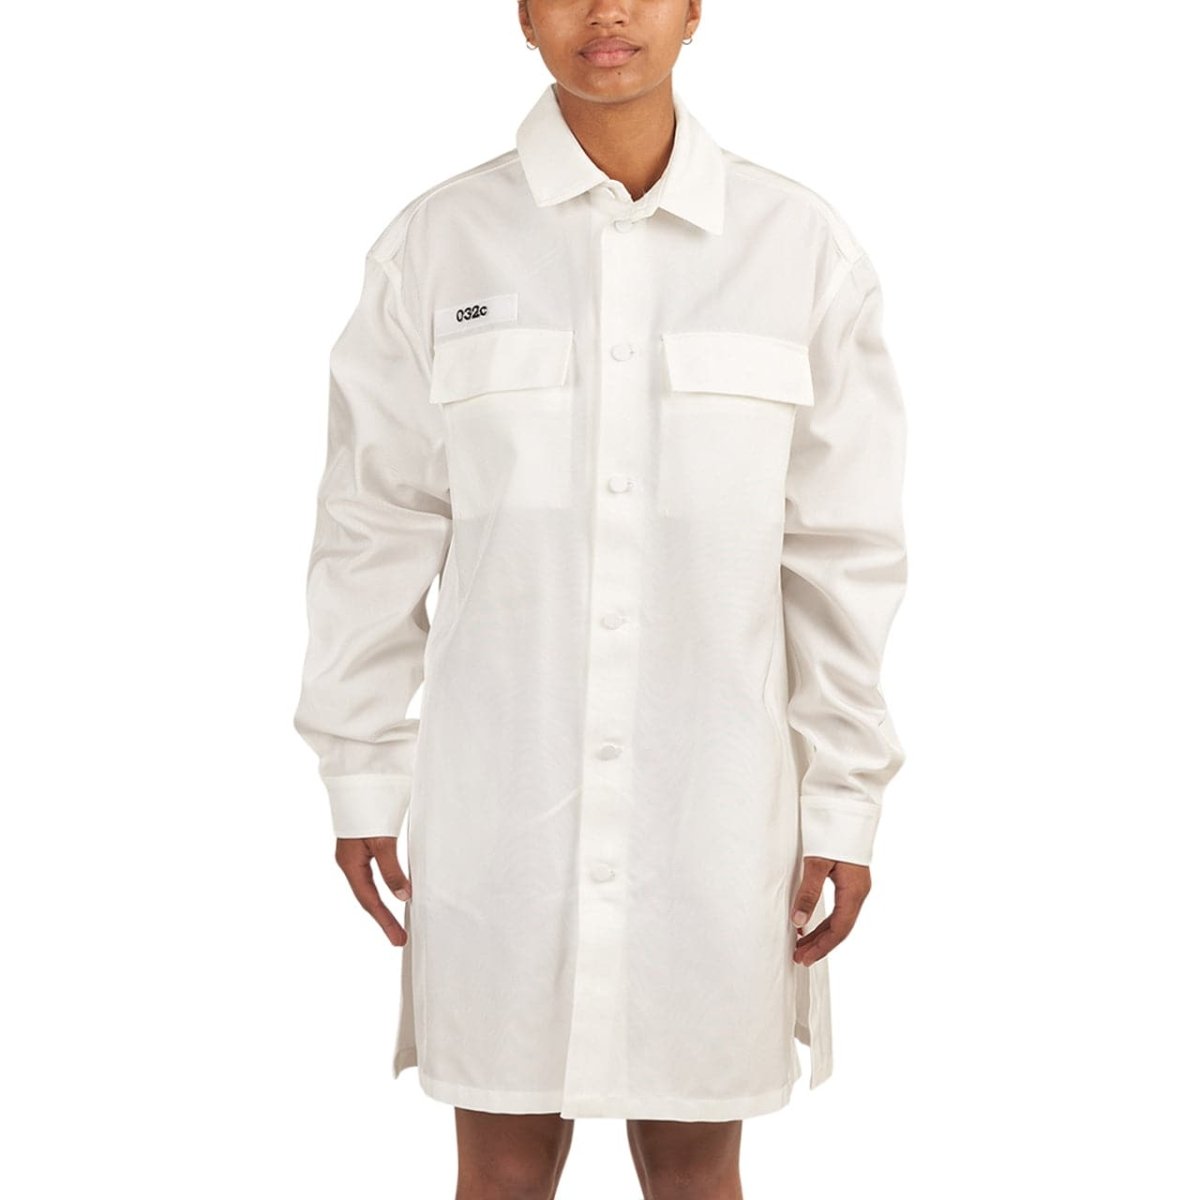 Image of 032c Summer Shirt Dress (White)